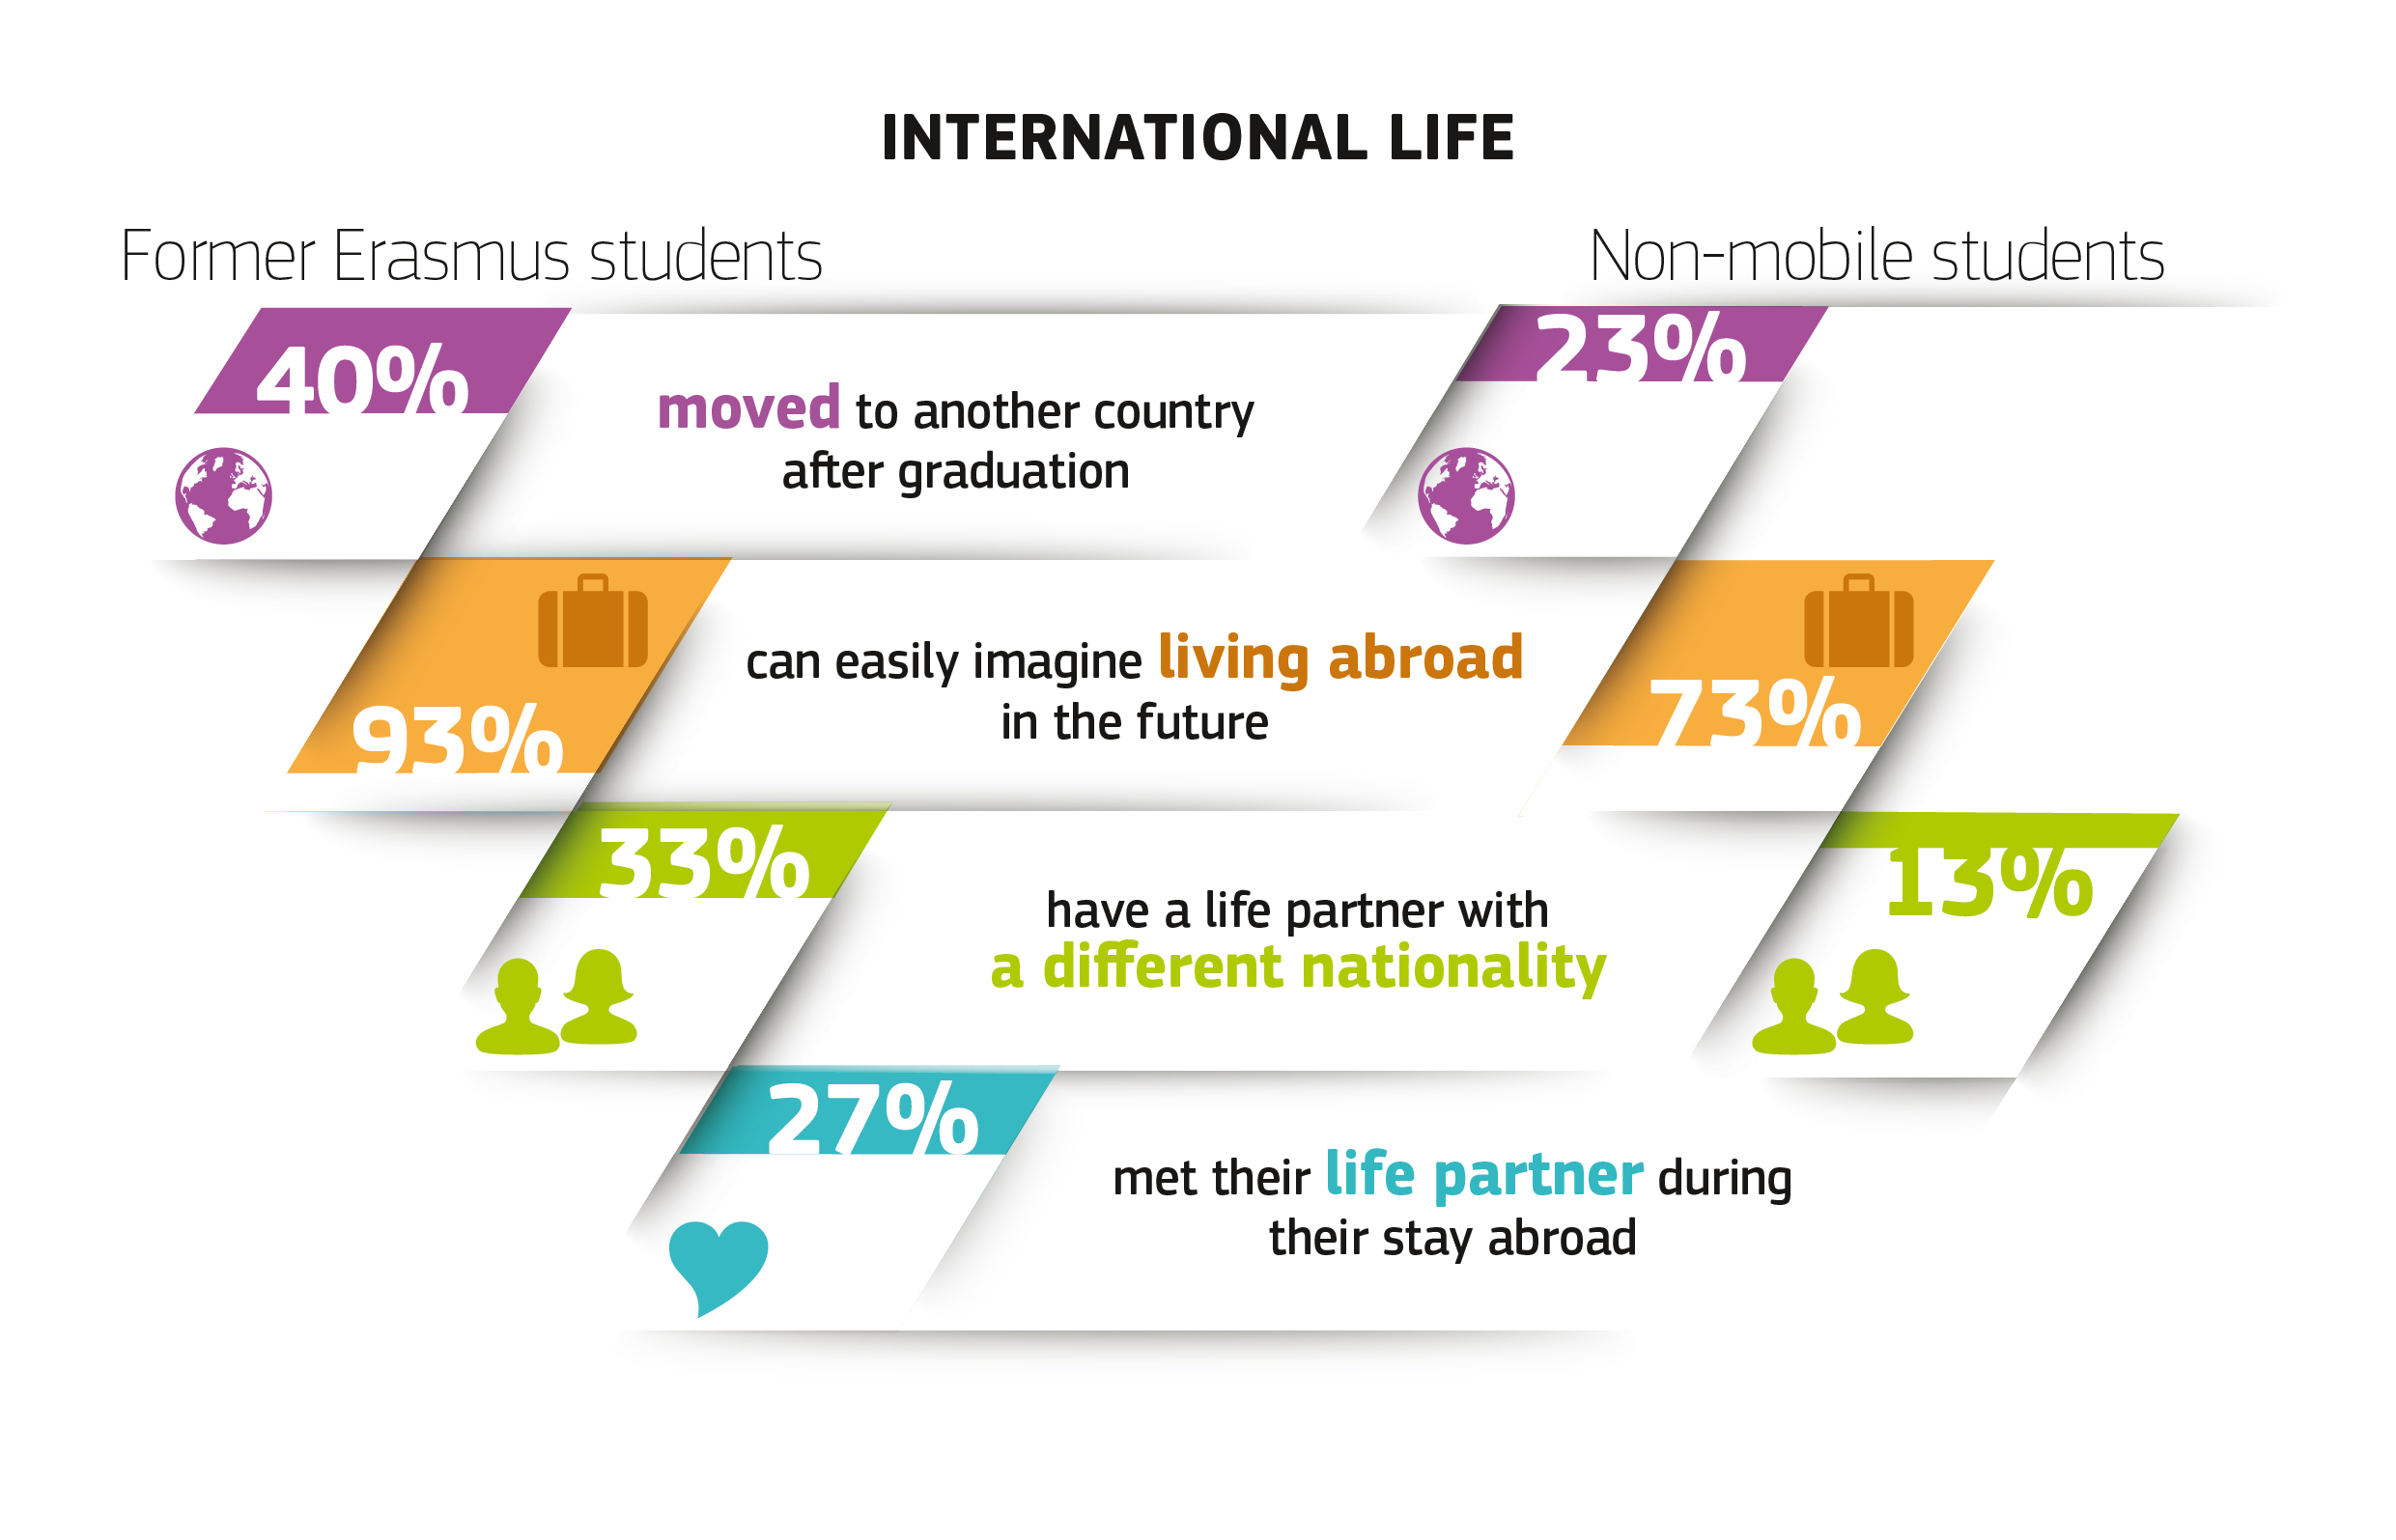 Erasmus Impact Study - International life